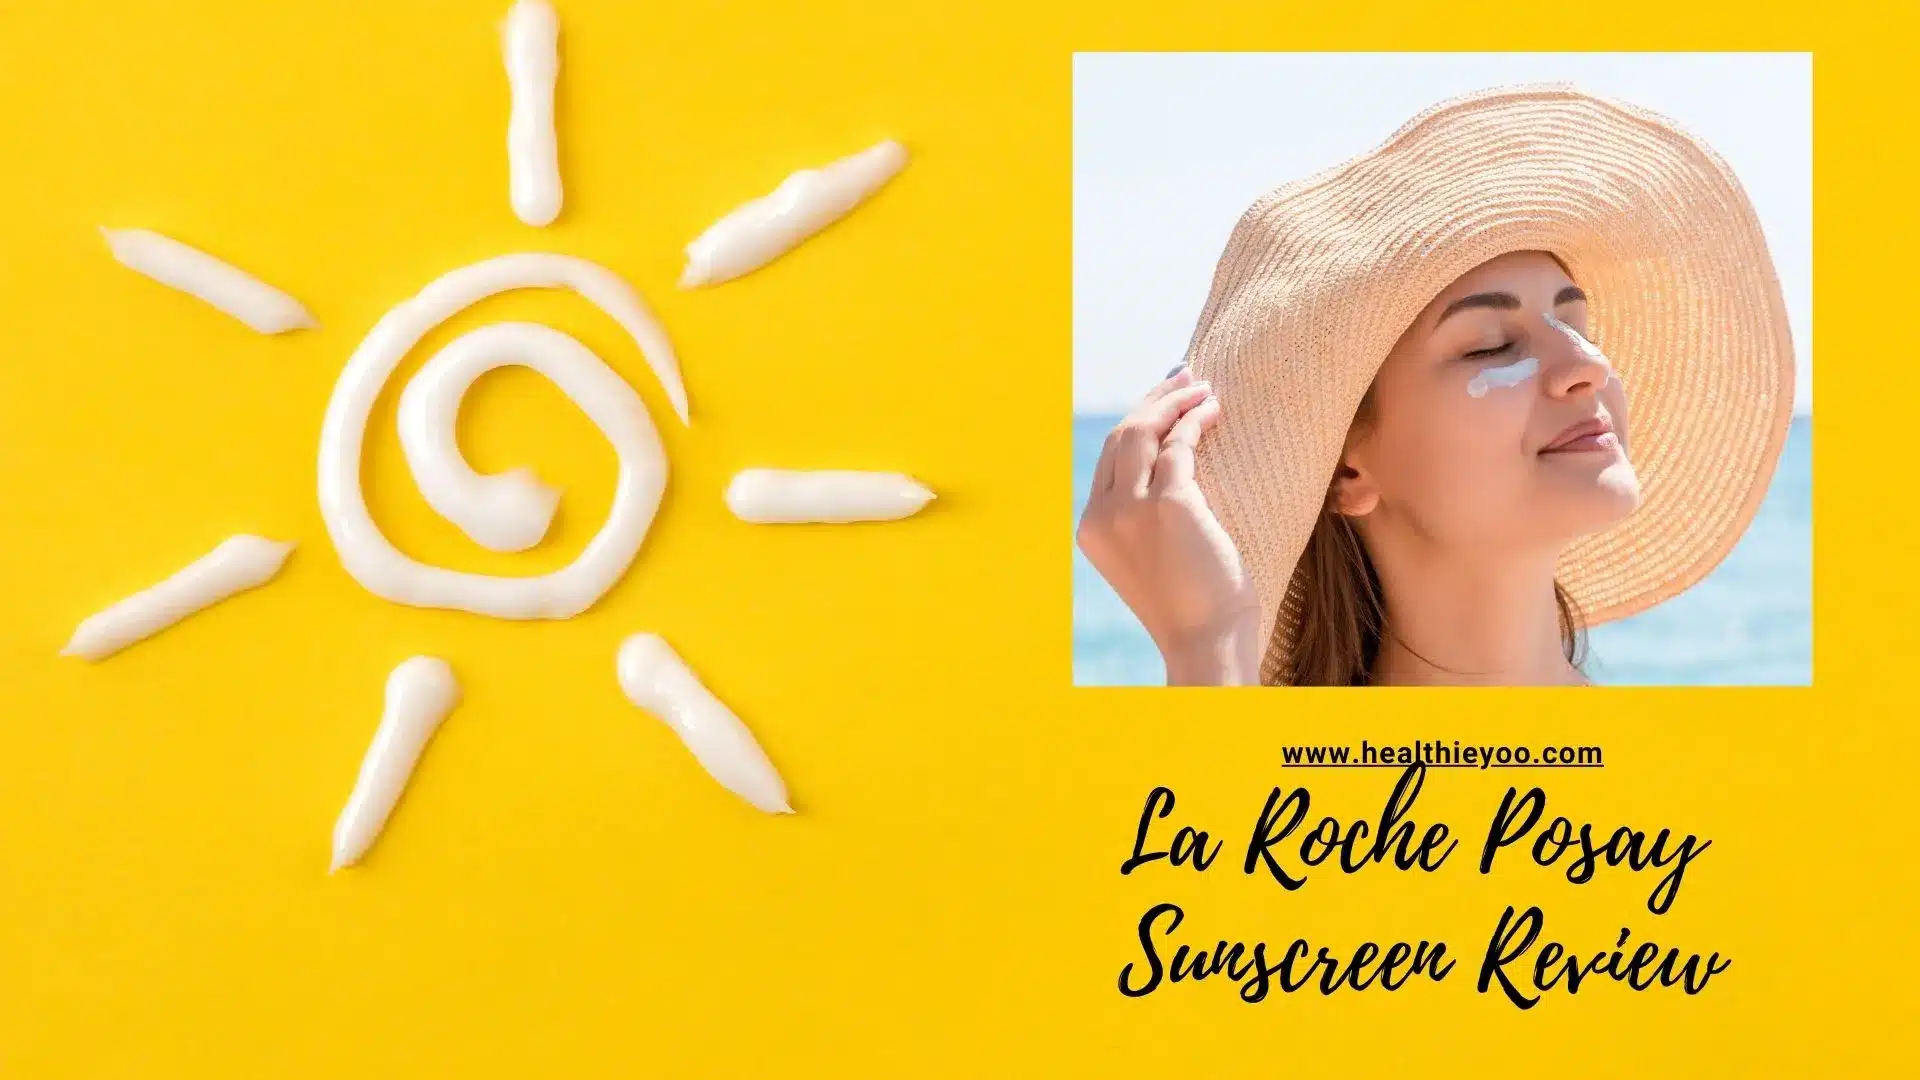 La Roche Posay Sunscreen Review, Tinted, Melt-in-milk, Face, Body, Kids, Spray, Ultra light sunscreens